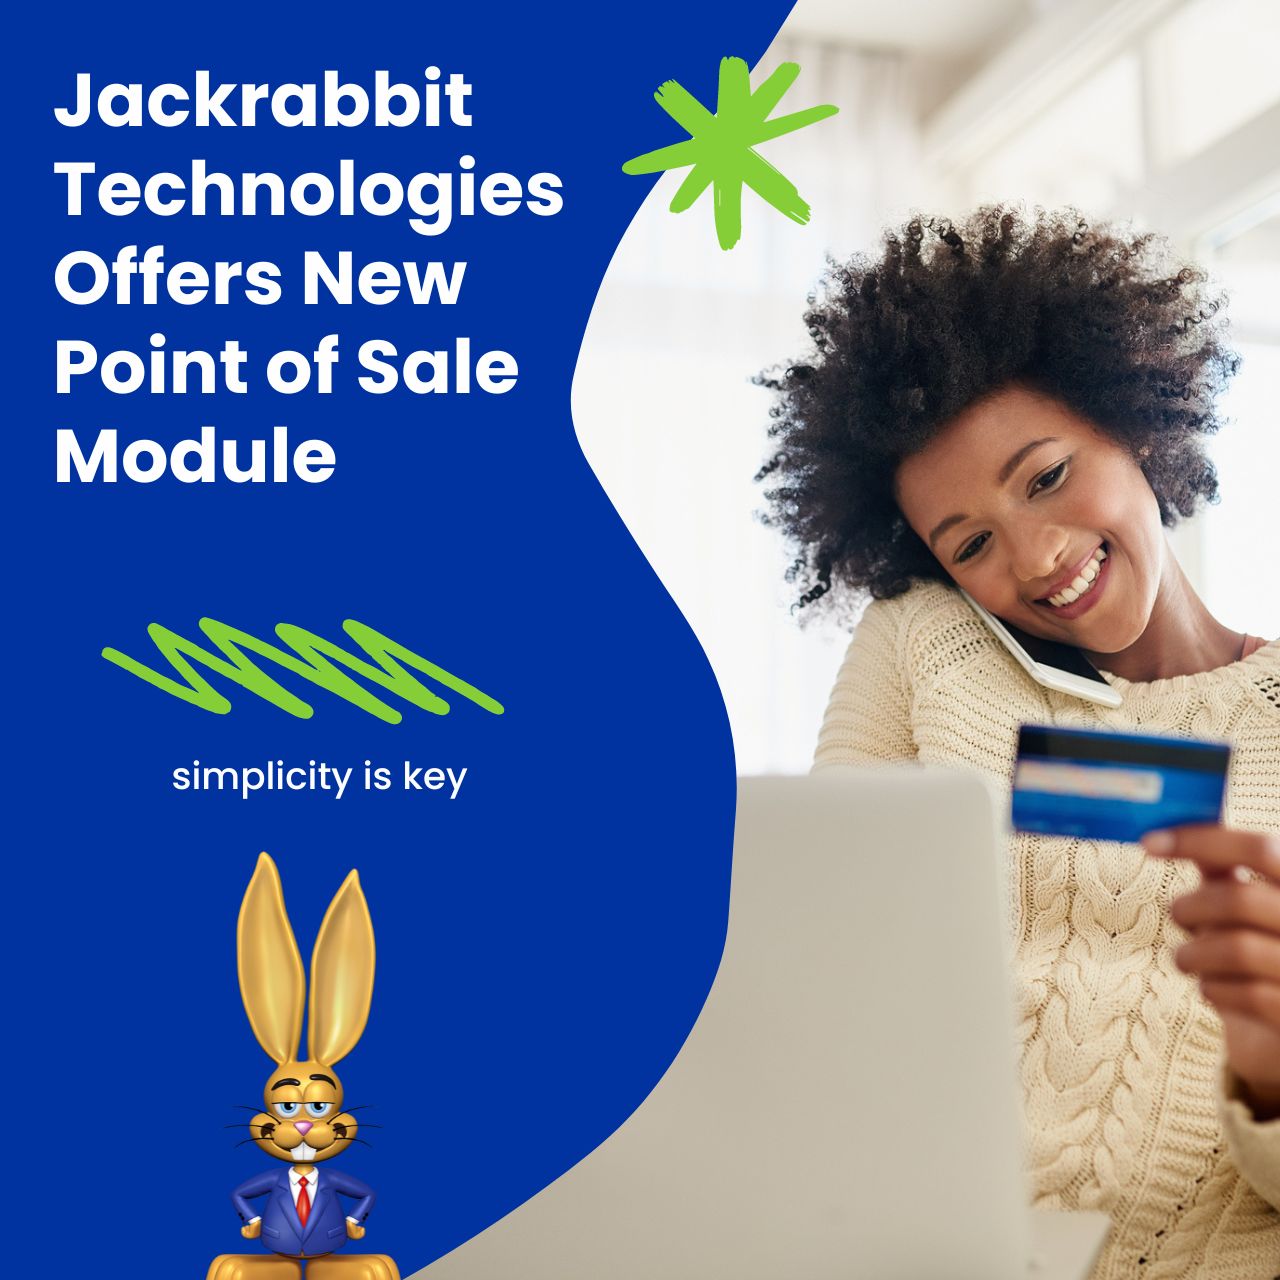 jackrabbit offers new point of sale module